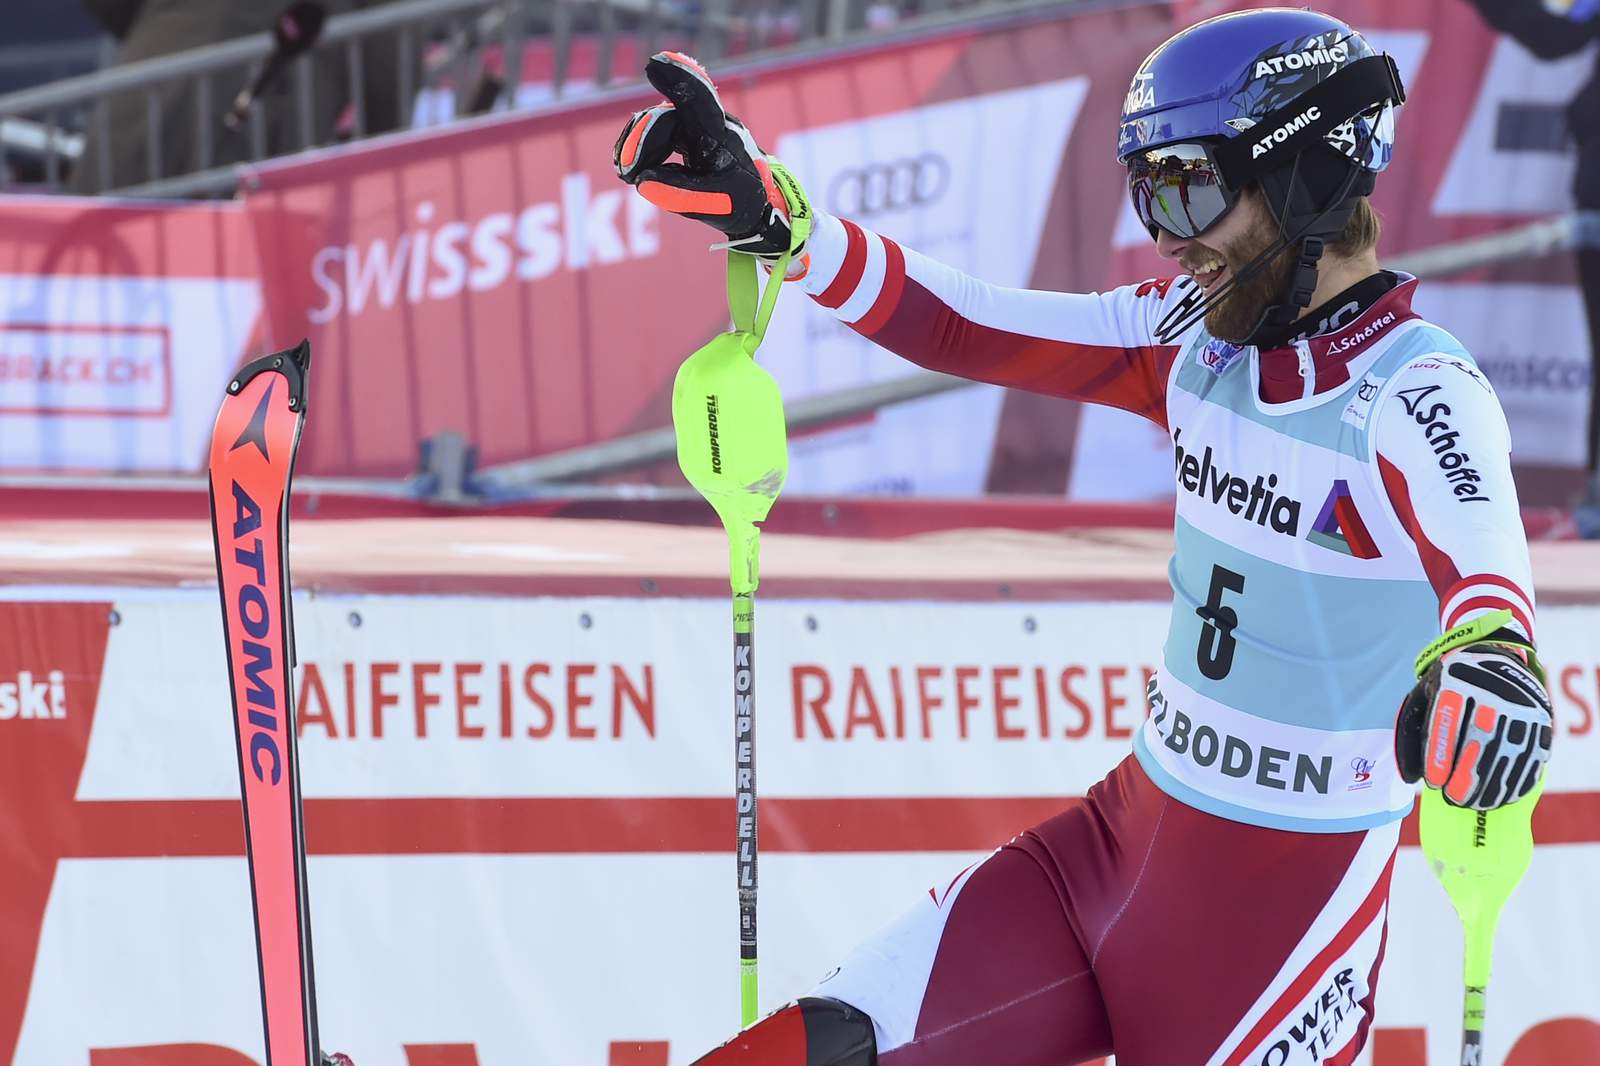 Austria's Schwarz wins World Cup slalom to lead standings